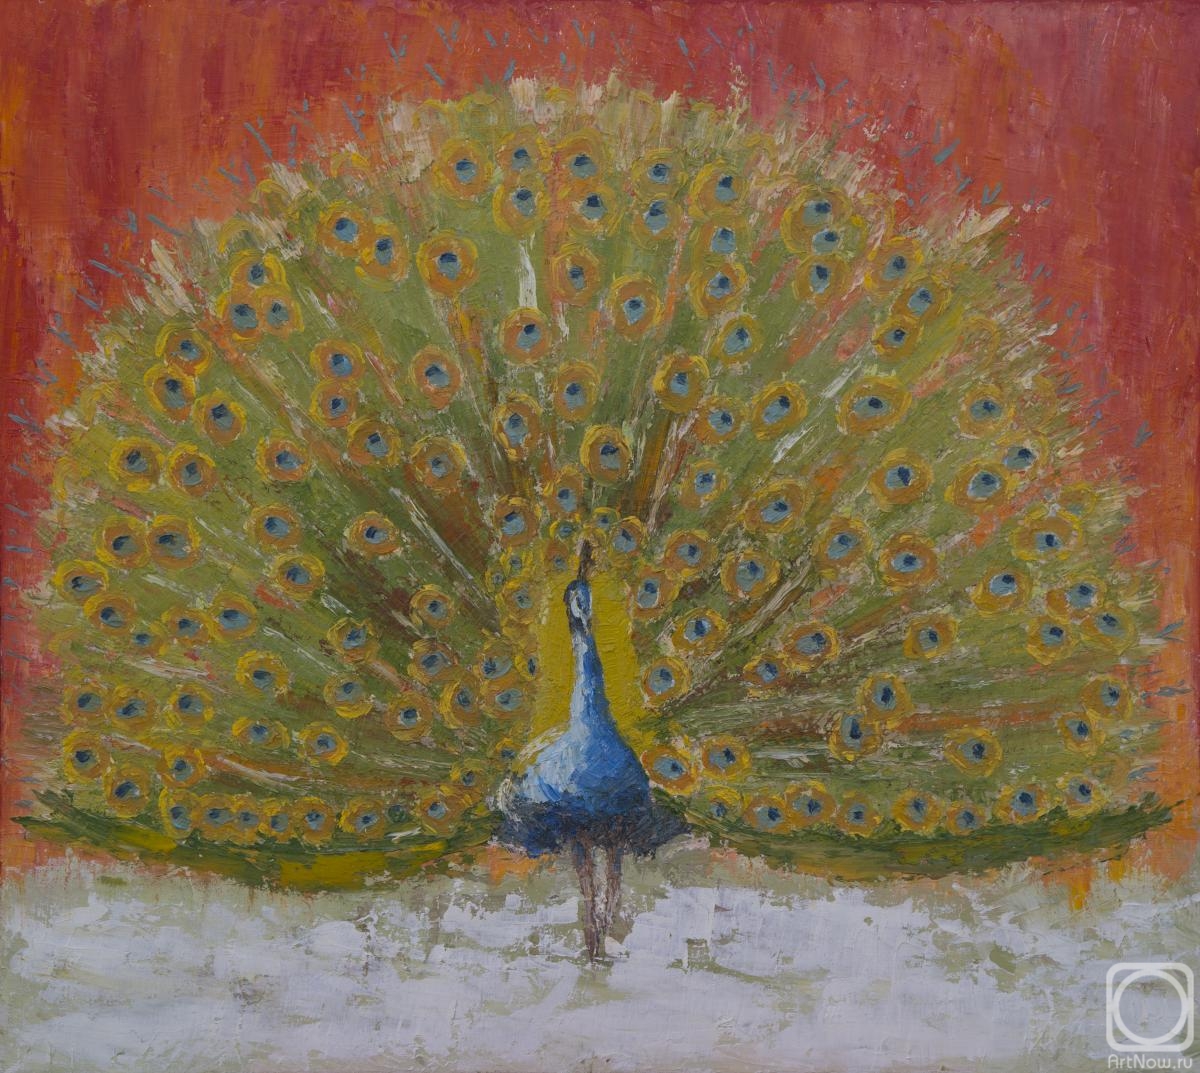 Sannikova Tatyana. The sacred peacock